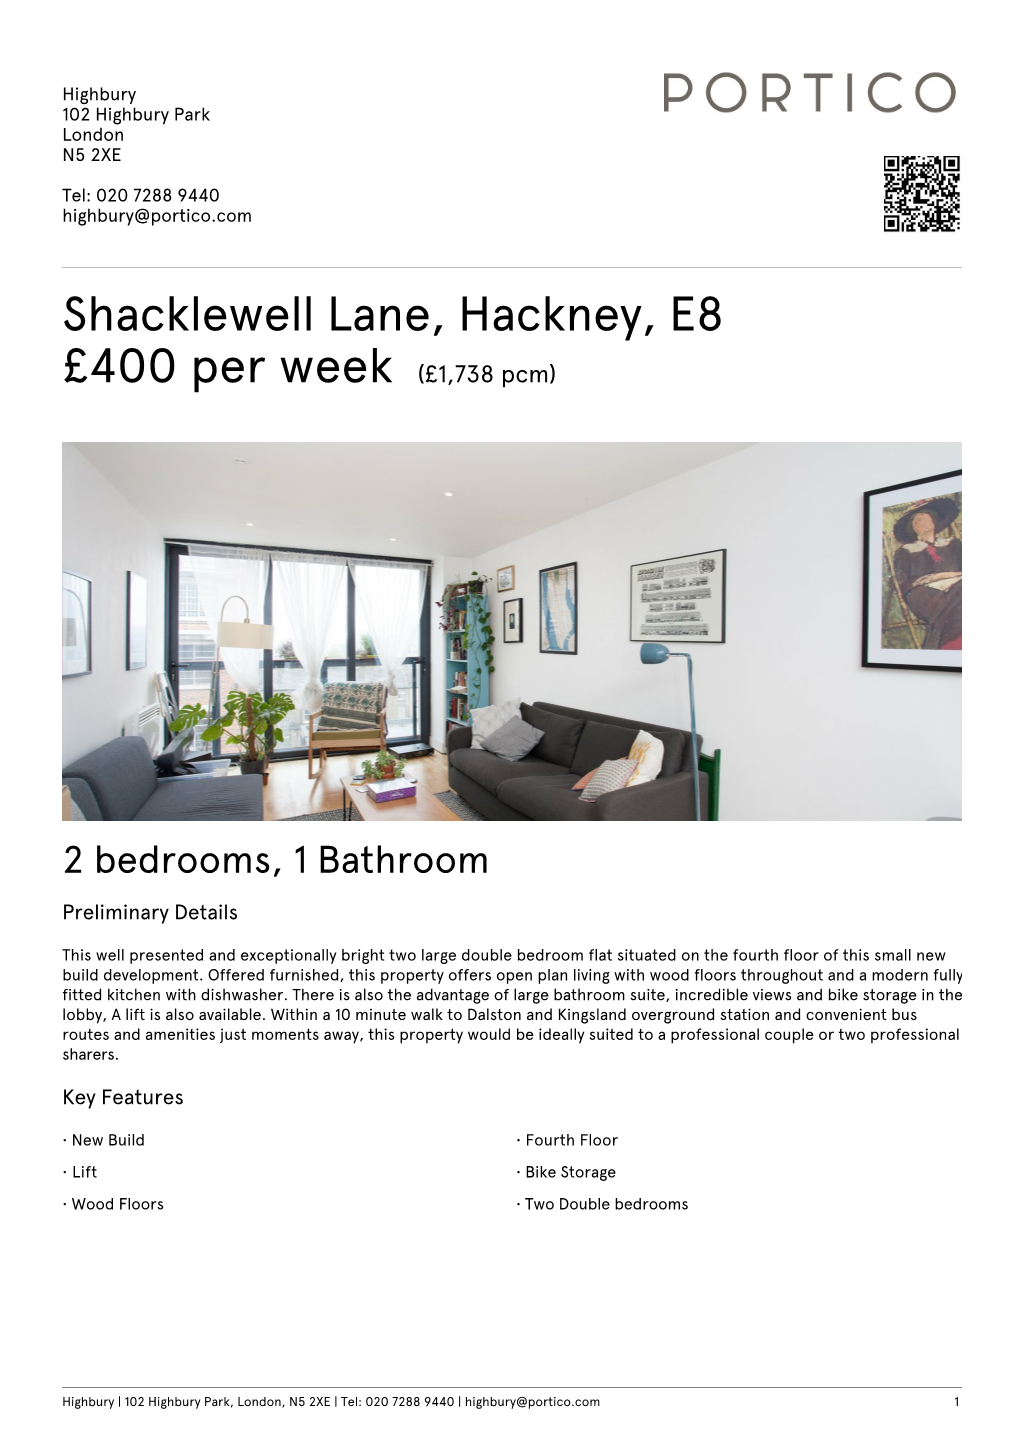 Shacklewell Lane, Hackney, E8 £400 Per Week